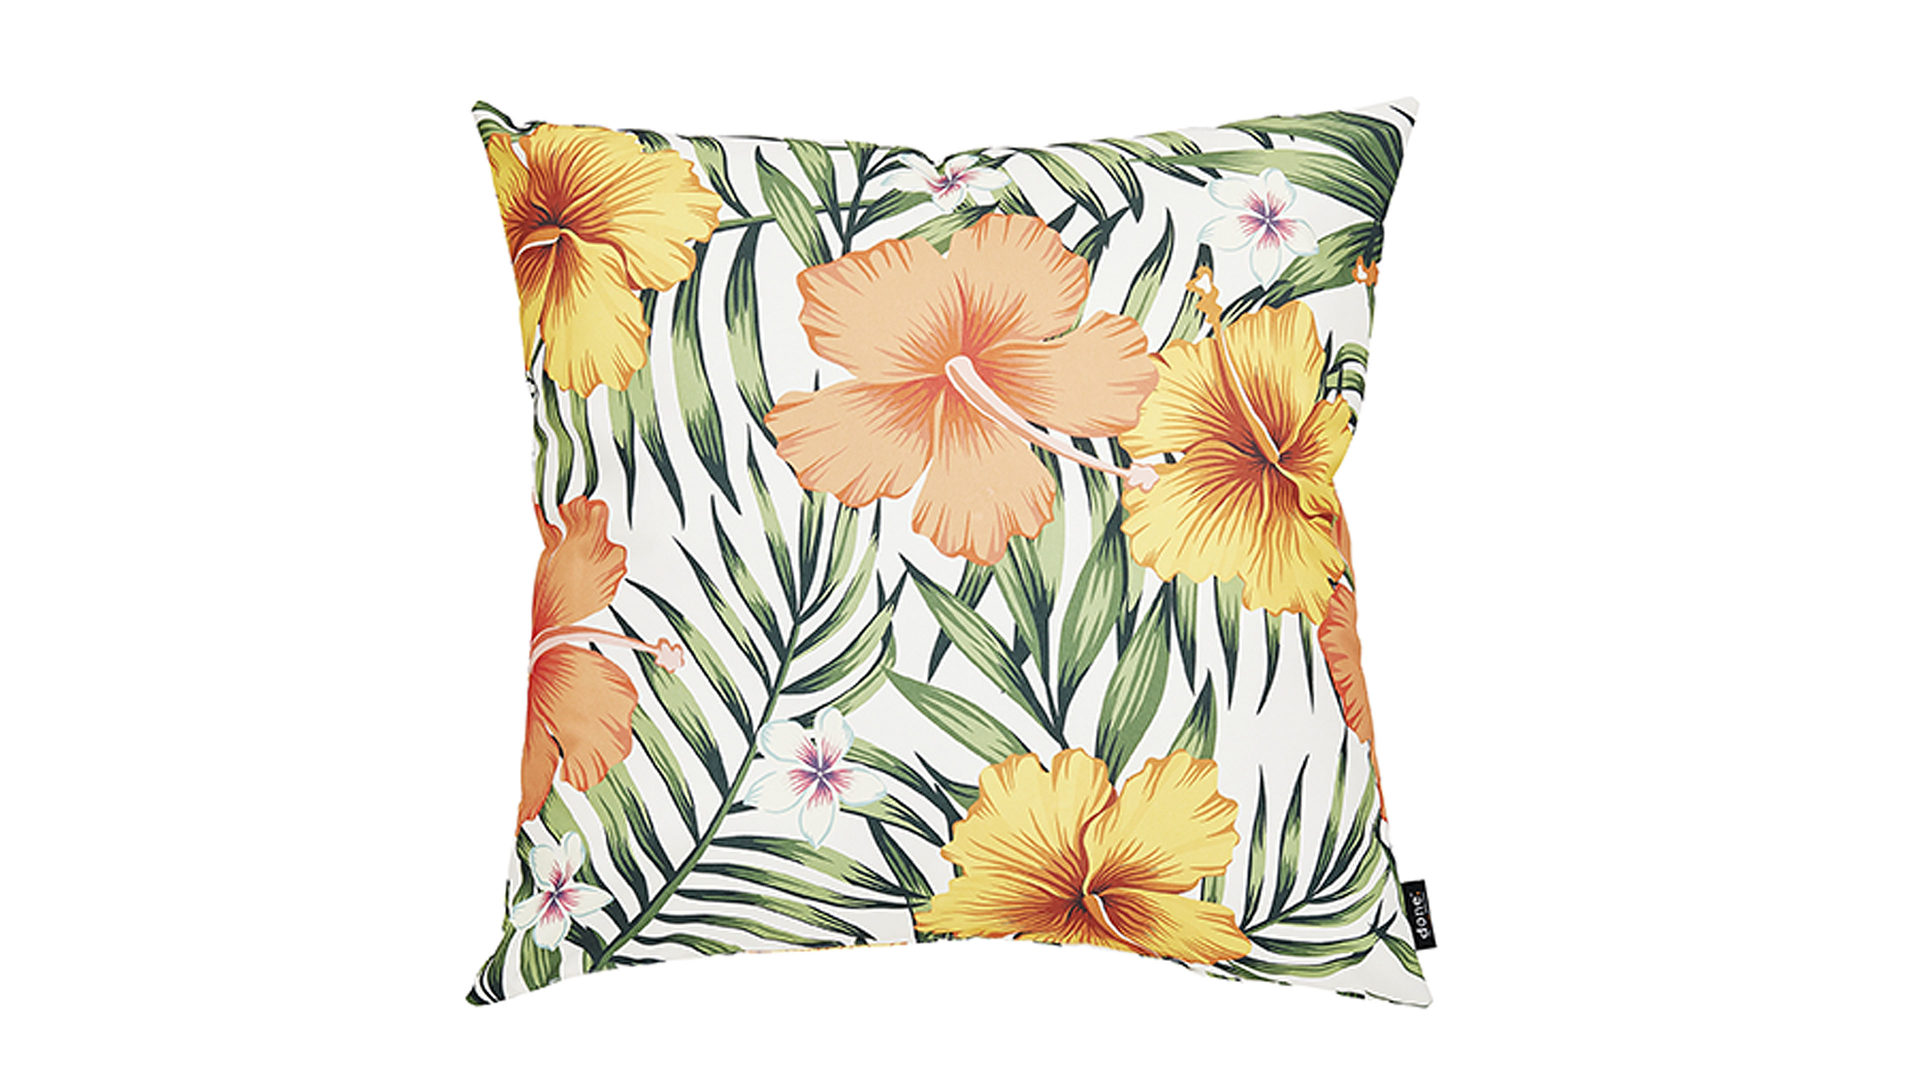 Einzelkissen Done® by karabel home company aus Kunstfaser in Orange DONE® Kissen Cushion Outside Rose Mallow Dessin Hibiscus – ca. 65 x 65 cm